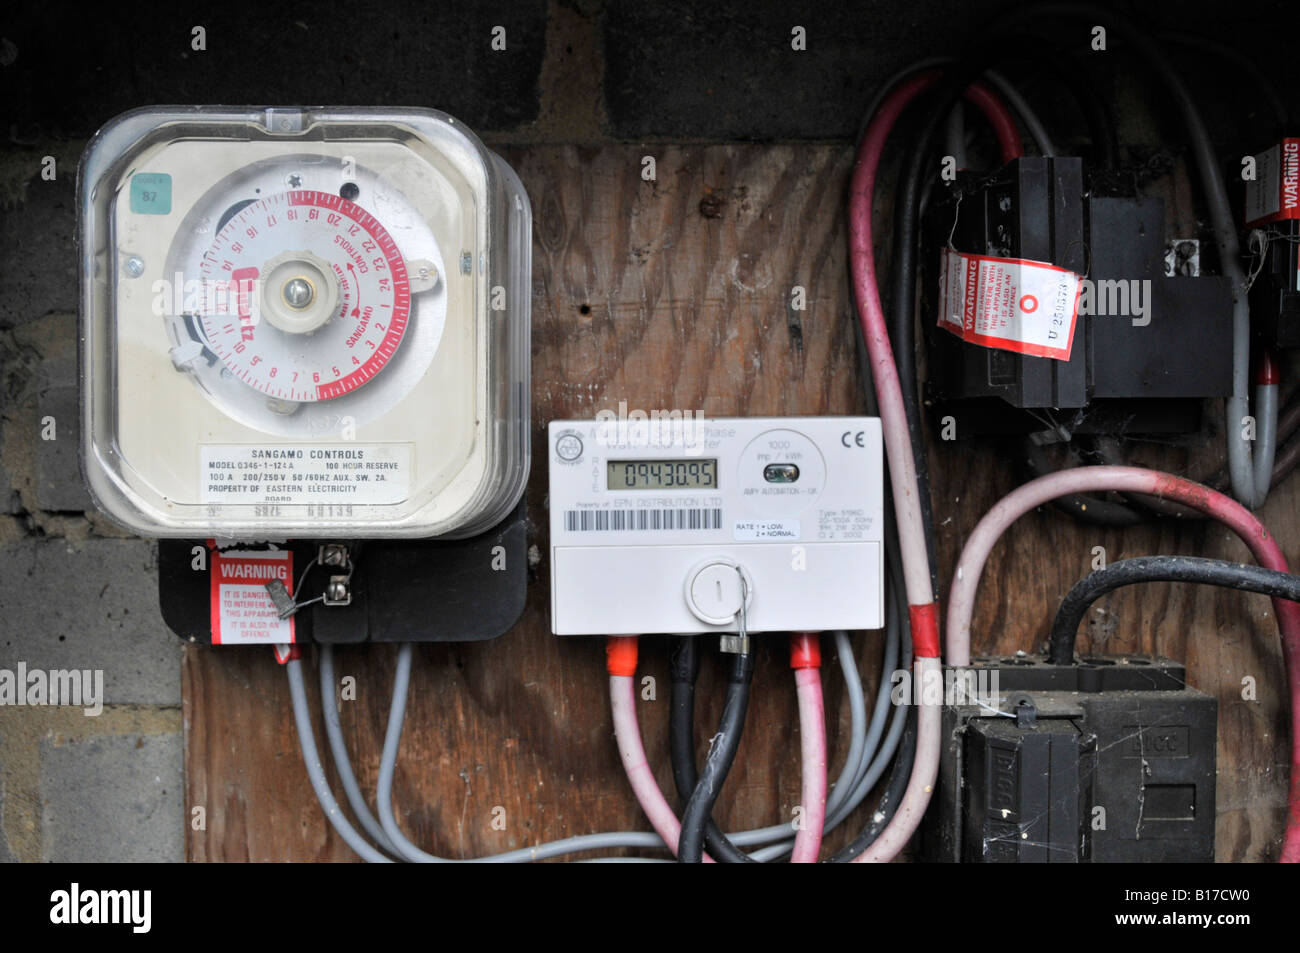 british gas r1 smart meter instructions